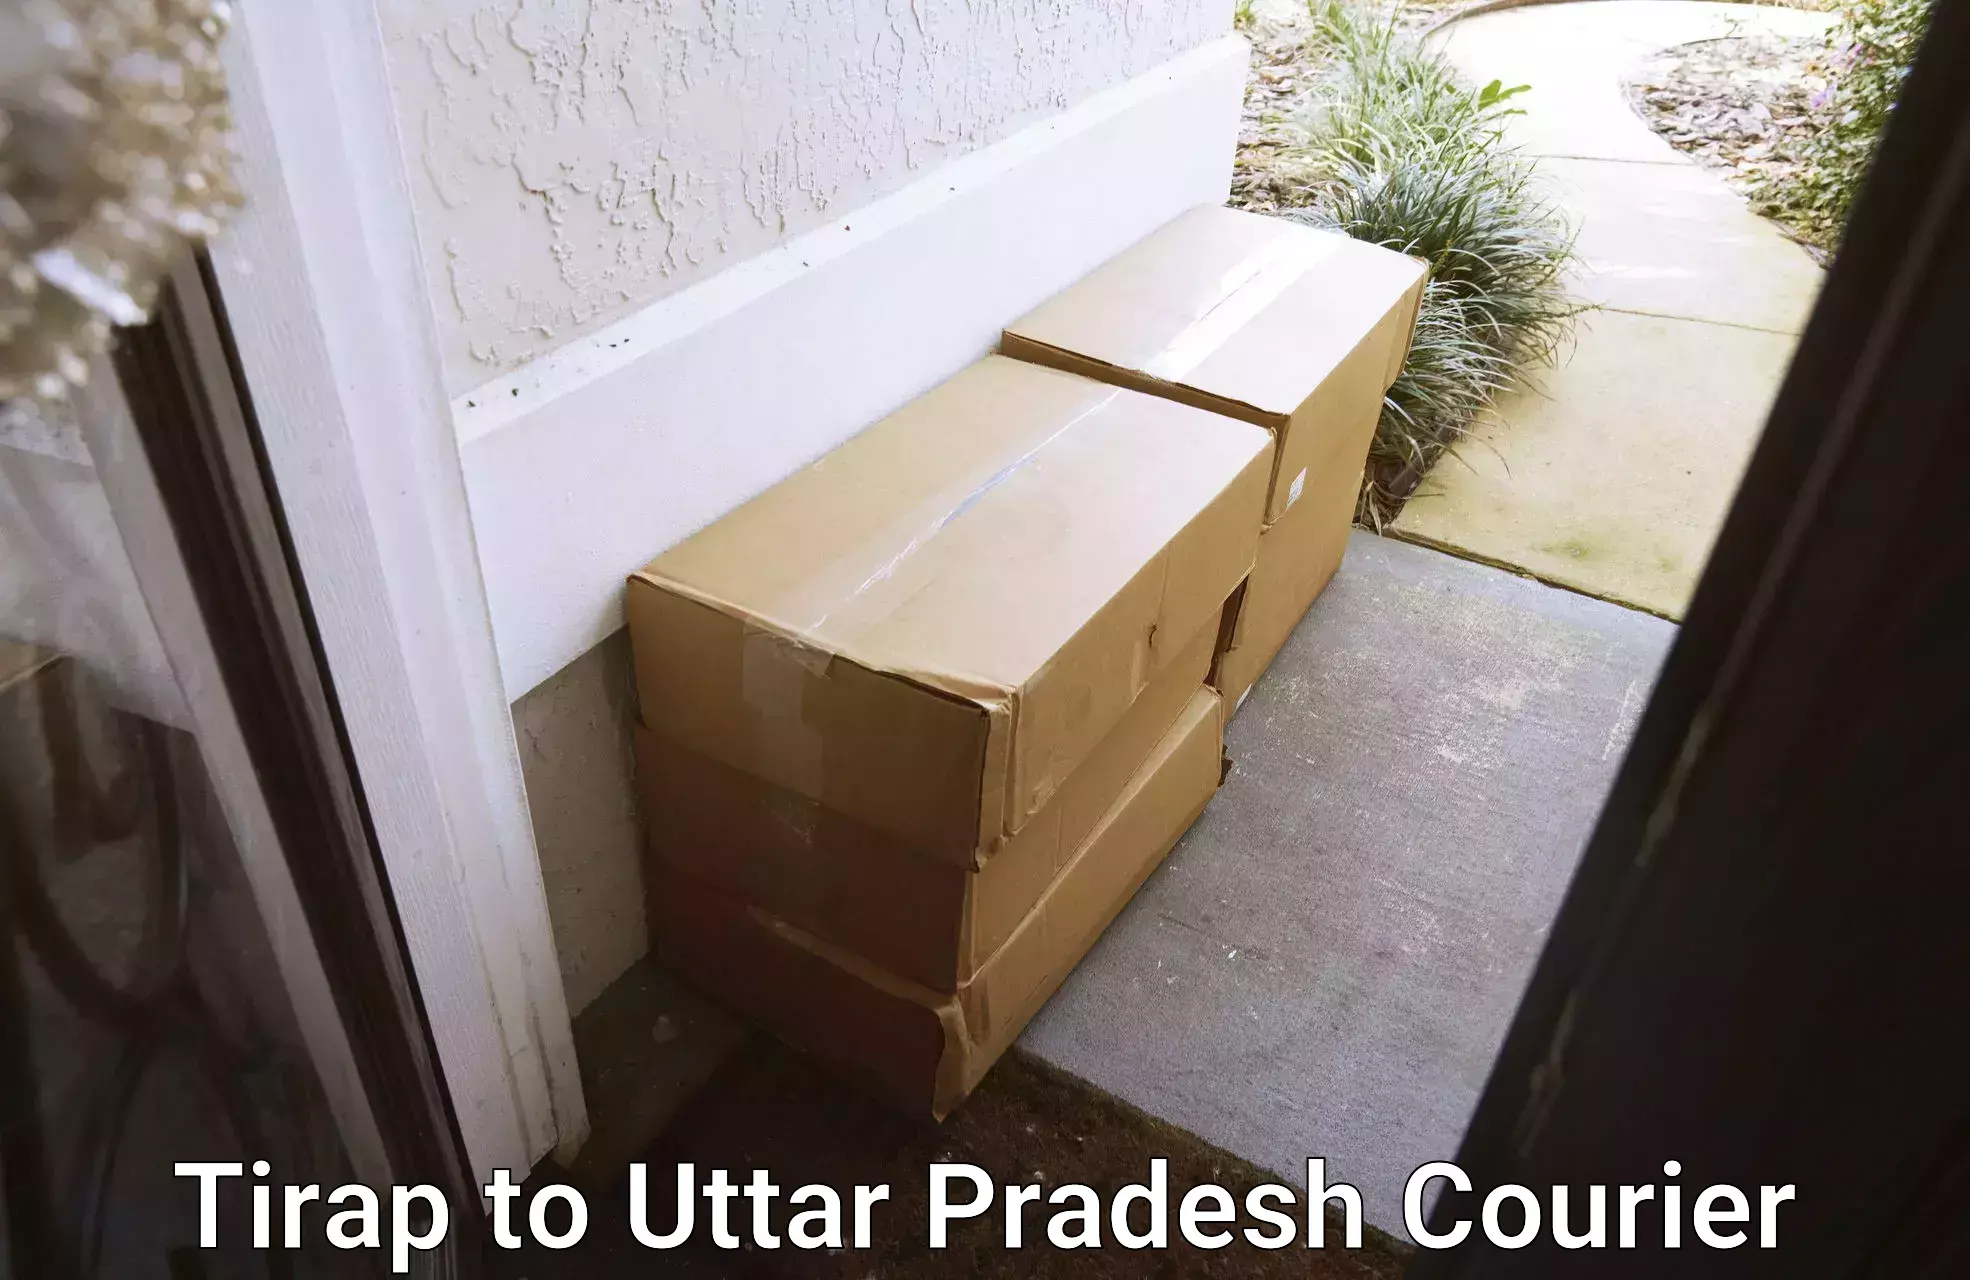 Premium courier services Tirap to Vrindavan